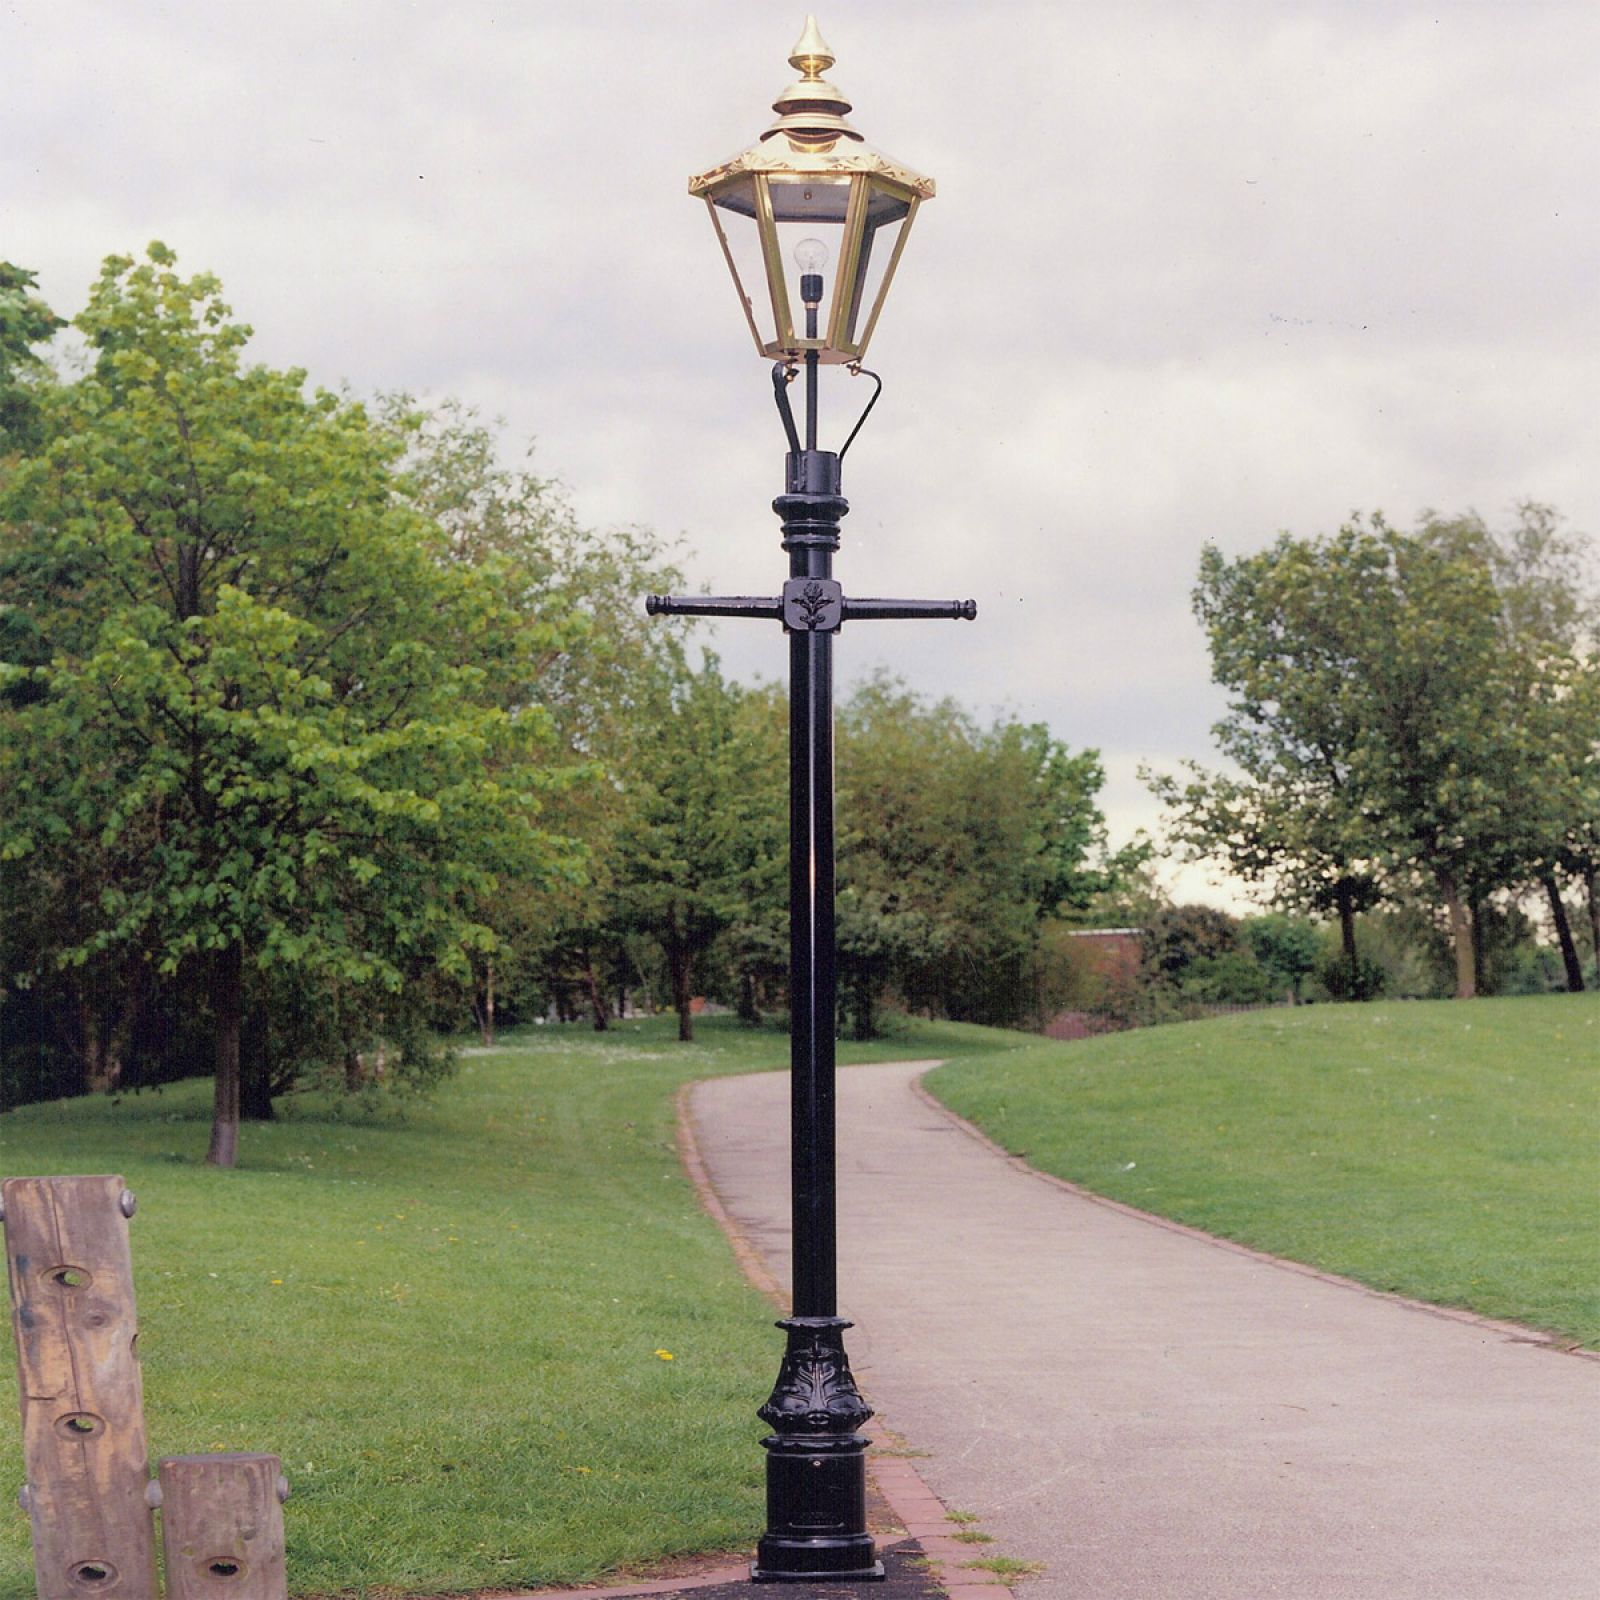 Lichfield lamp post | Historic Lamp posts